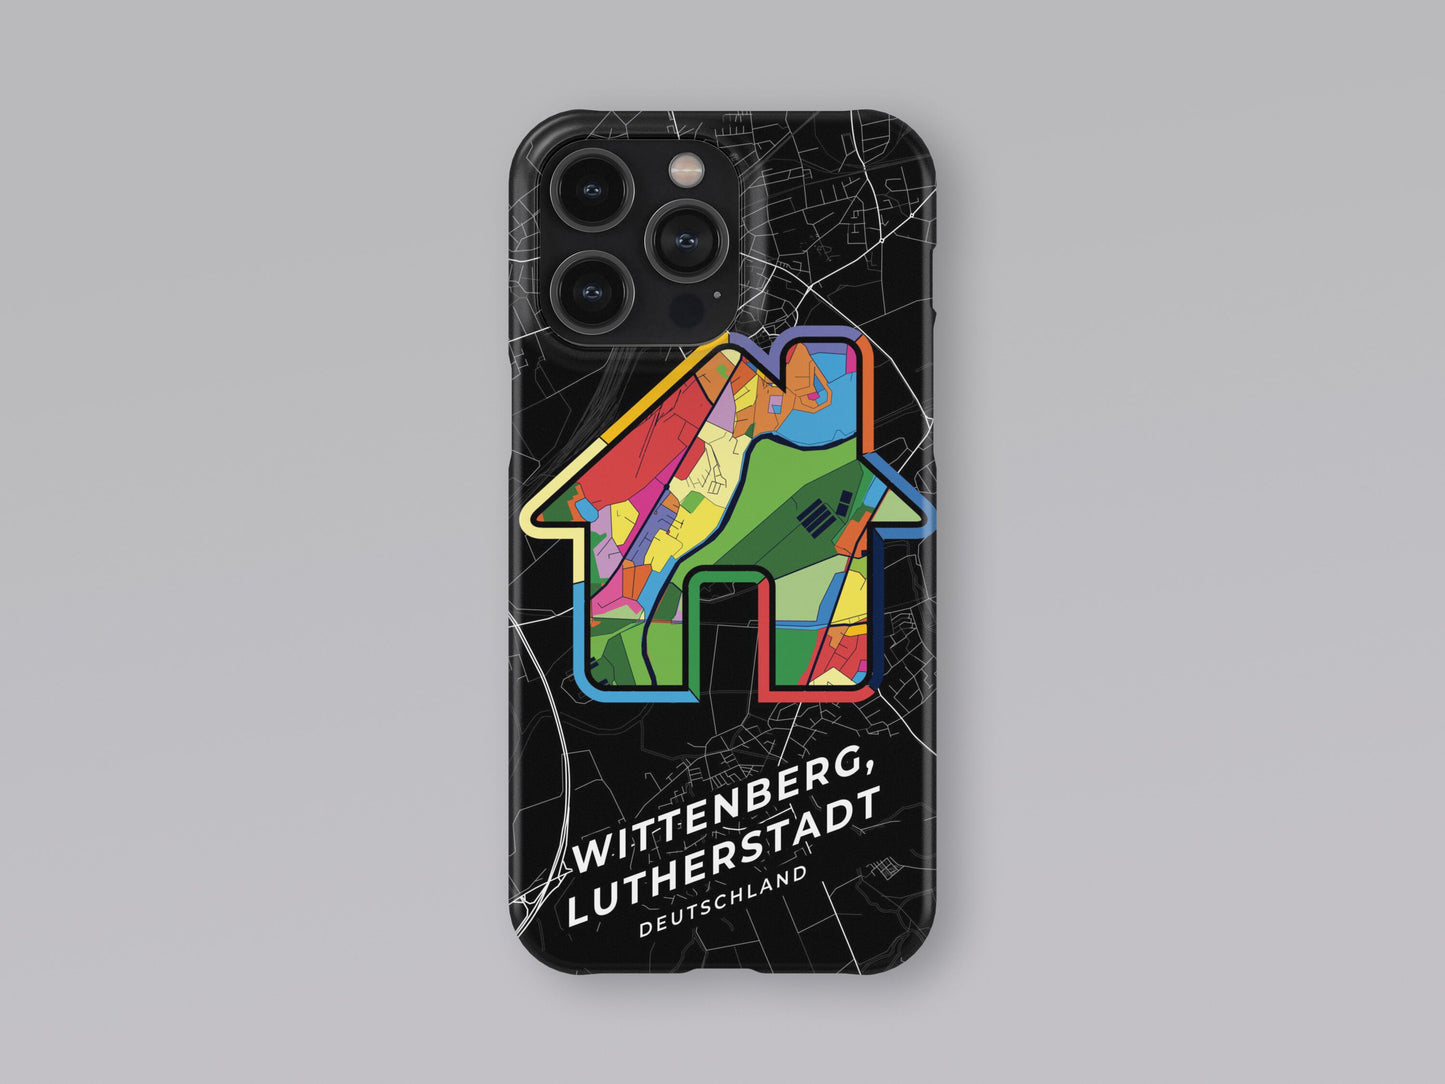 Wittenberg, Lutherstadt Deutschland slim phone case with colorful icon 3